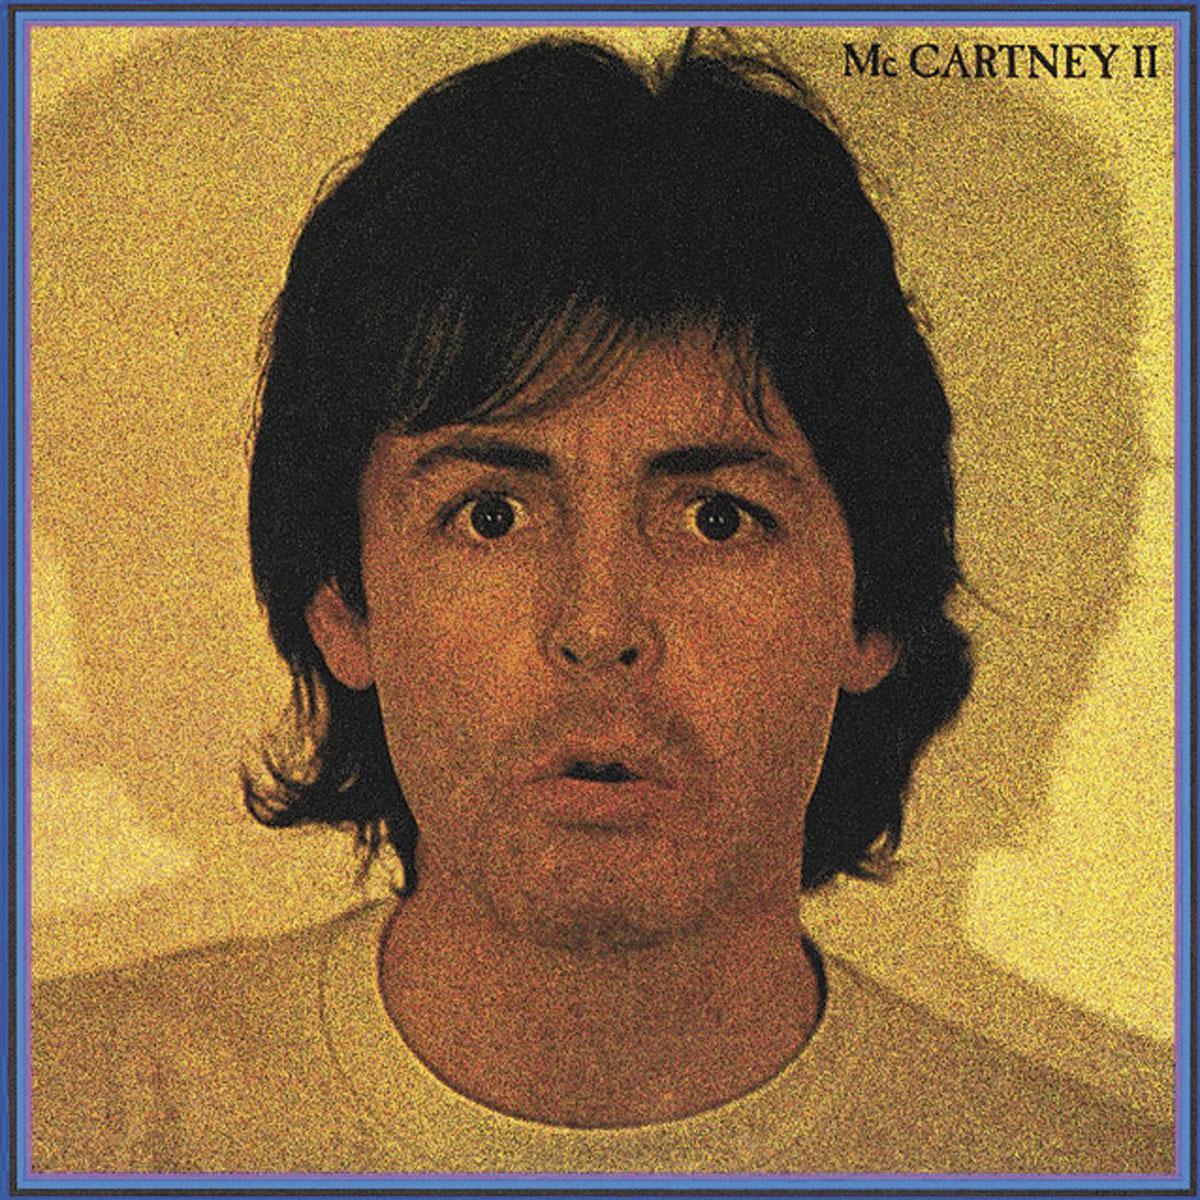 Paul McCartney: itinéraire d'une superstar inégale